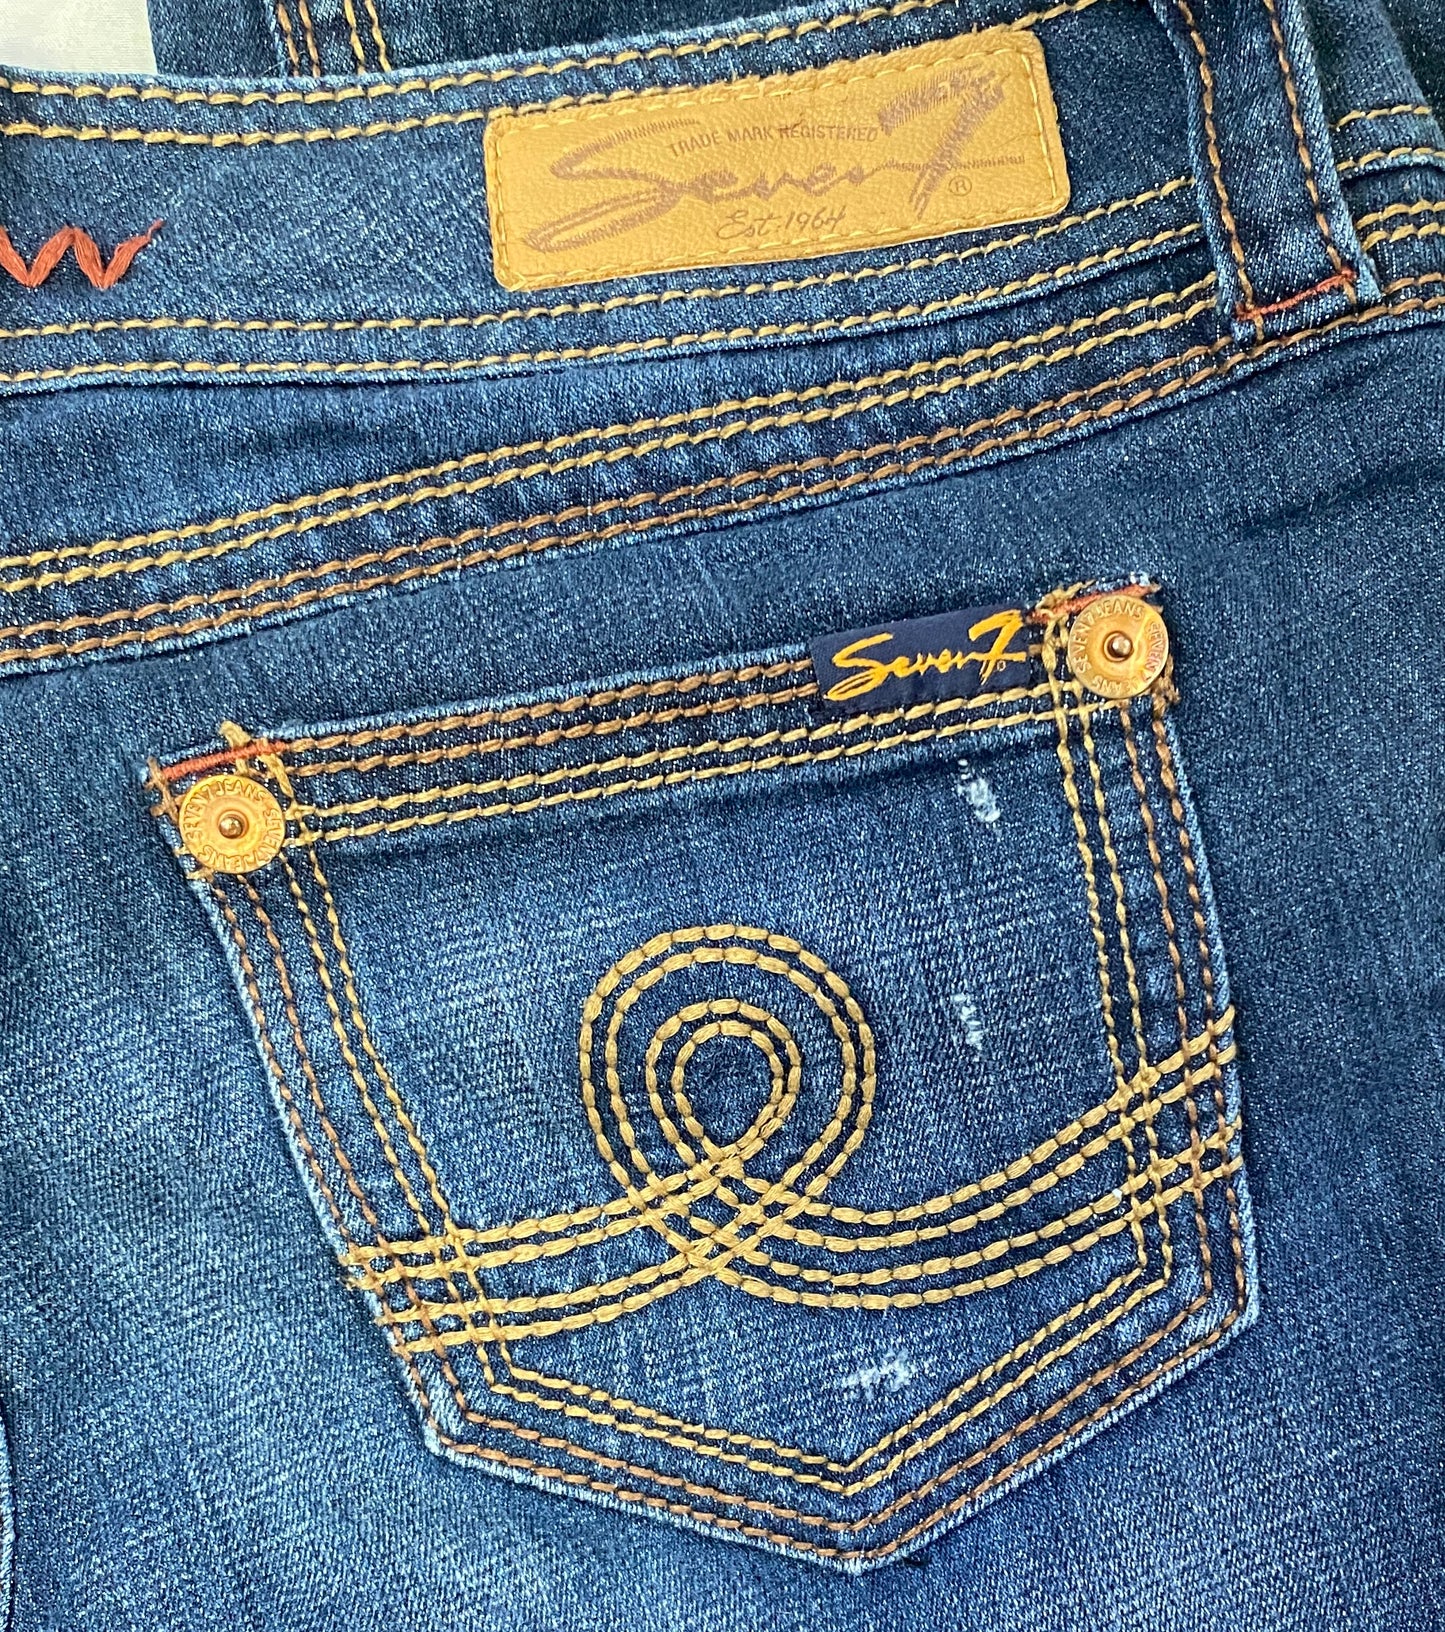 Seven 7 Jeans Blue Denim Bootcut Size 29 SKU 000376-1 – Designers